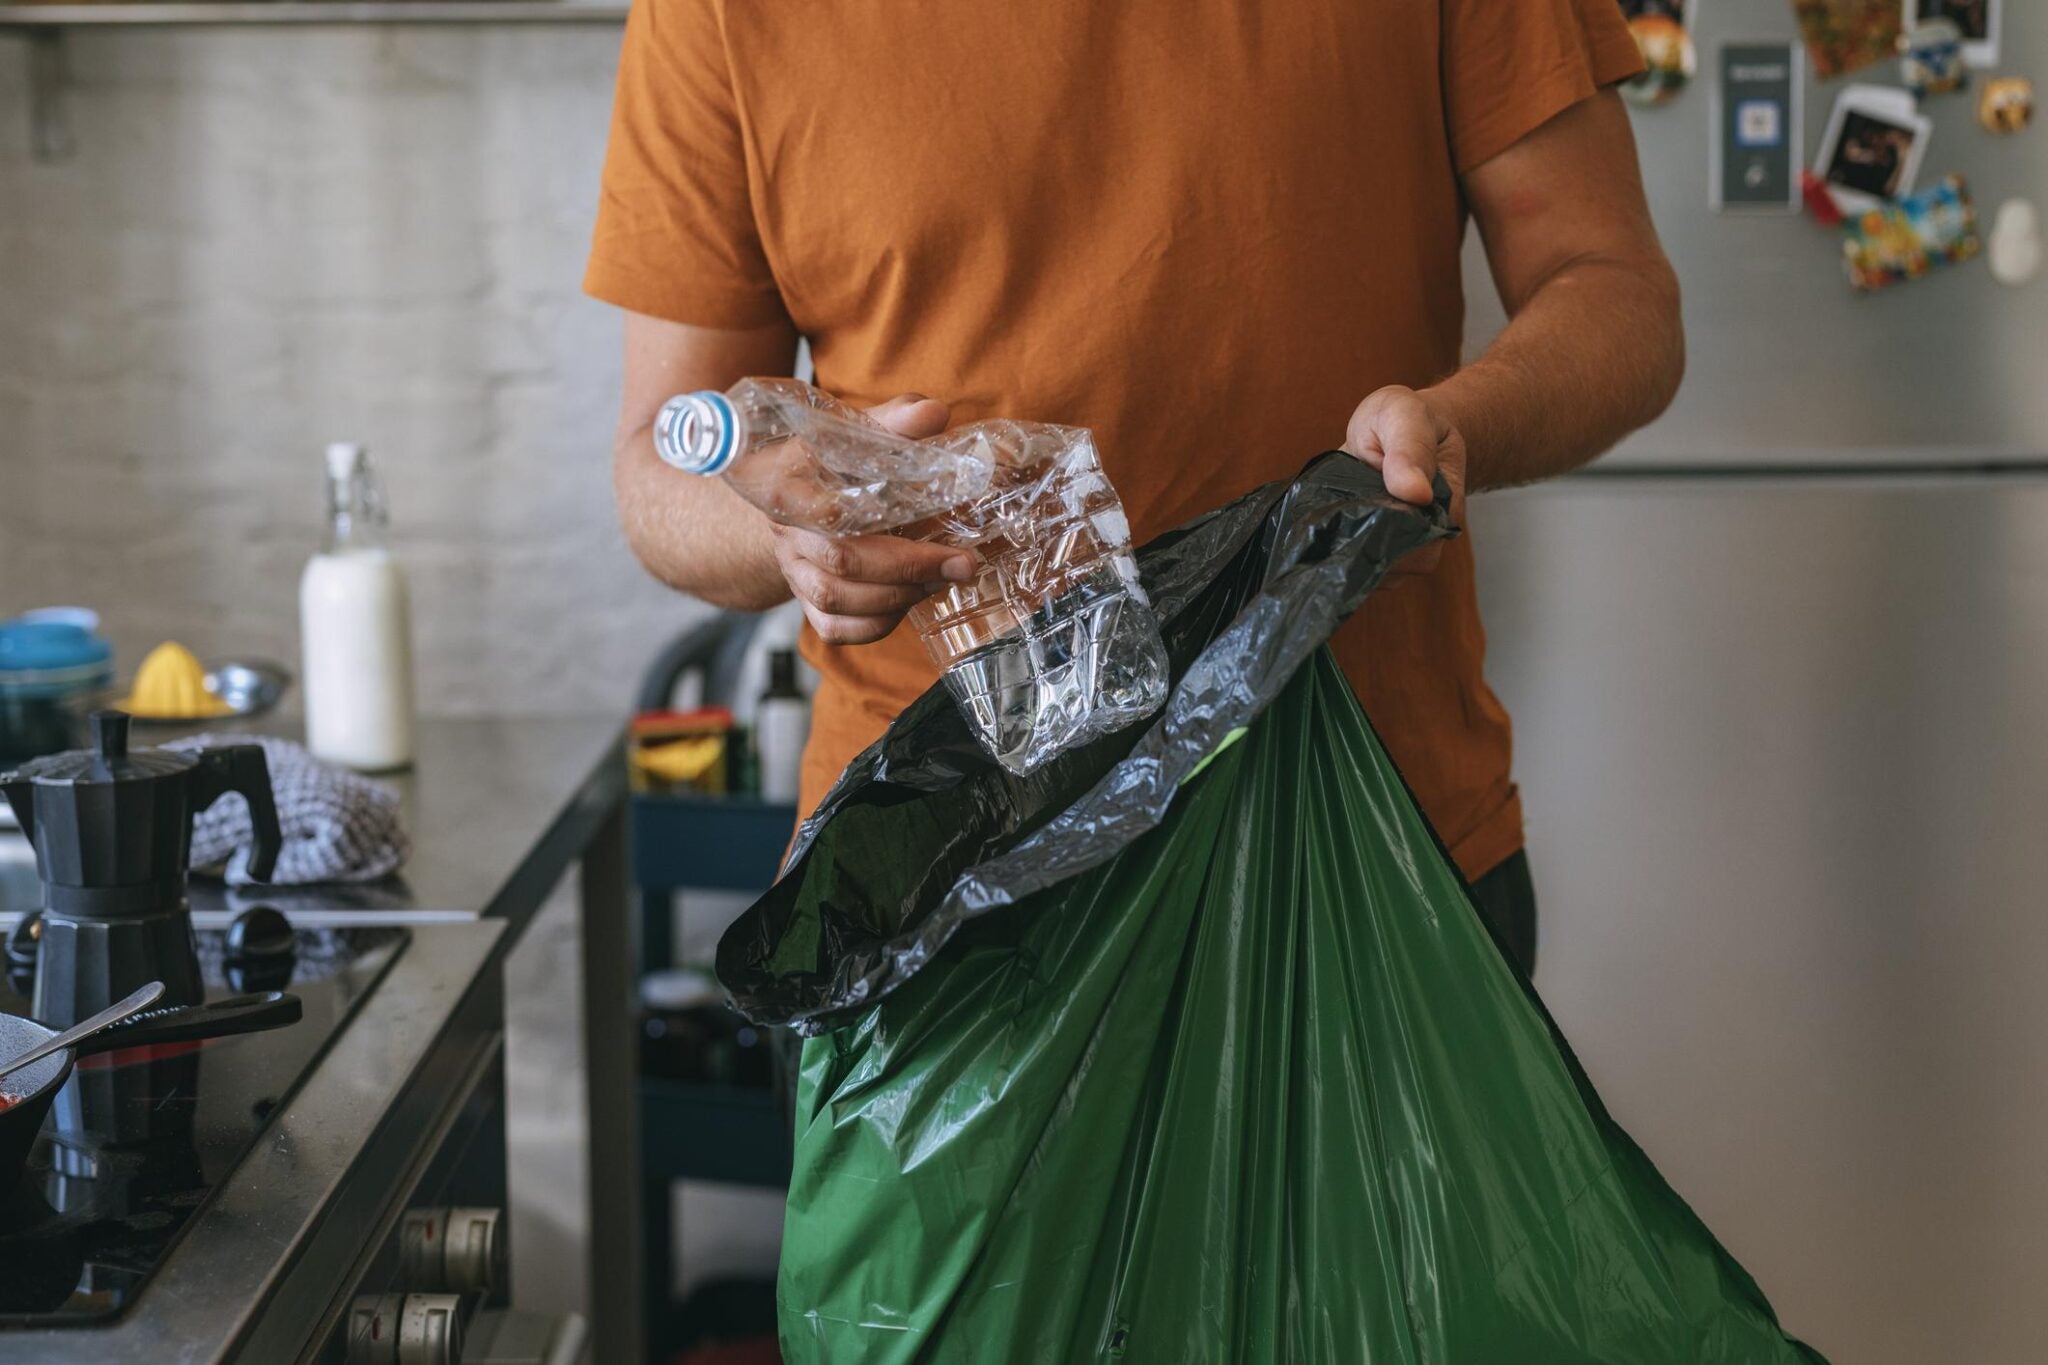 stop using plastic garbage bags